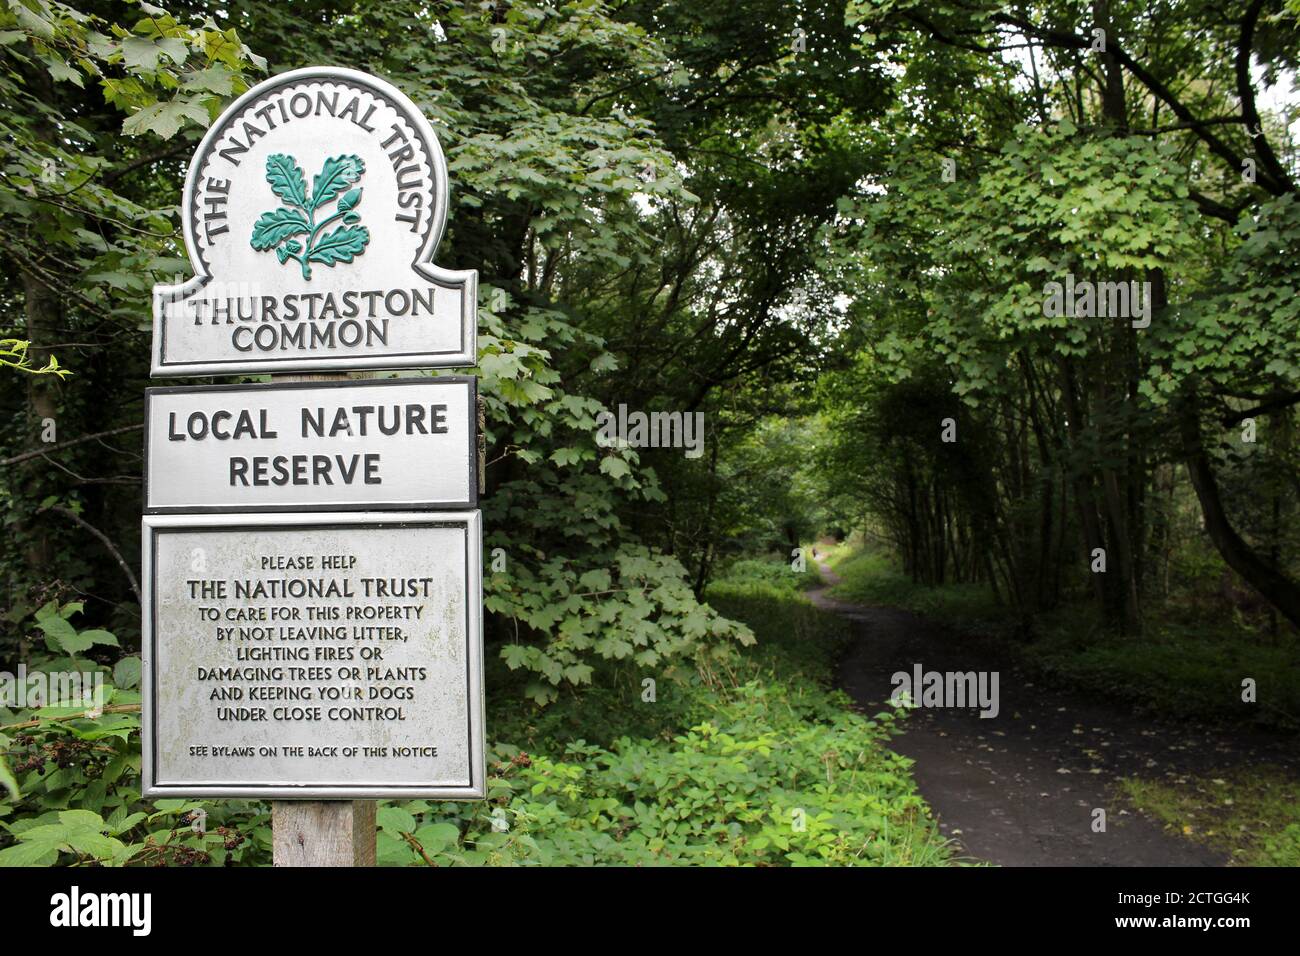 The National Trust - Thurstaston Common Nature Reserve, Wirral, UK Stock Photo